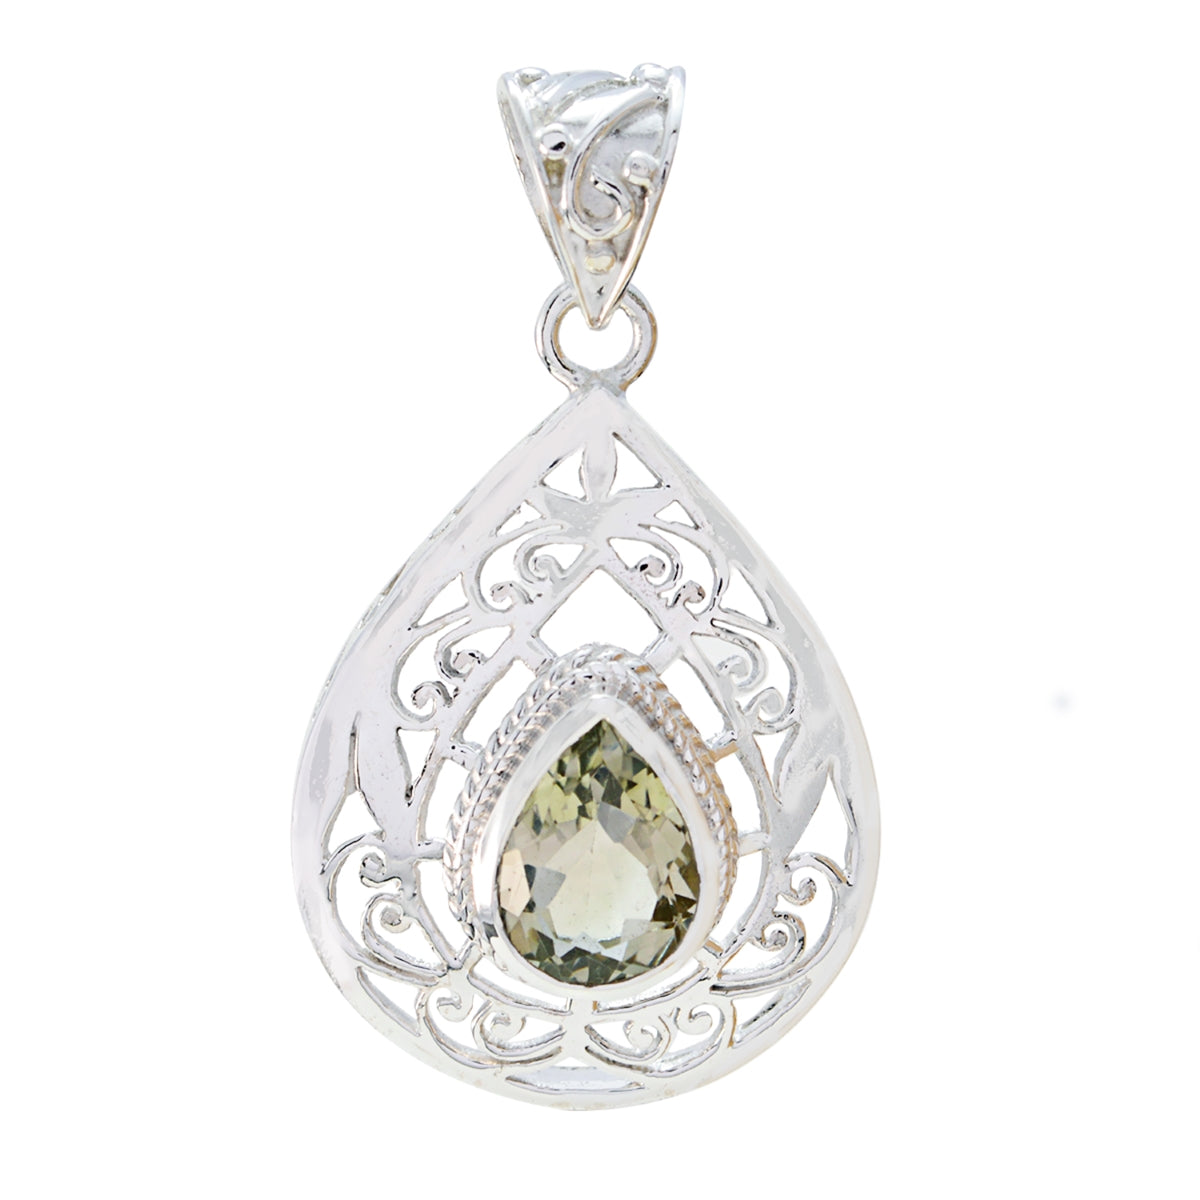 Riyo Good Gemstones Pear Faceted Green Green Amethyst Solid Silver Pendant anniversary day gift